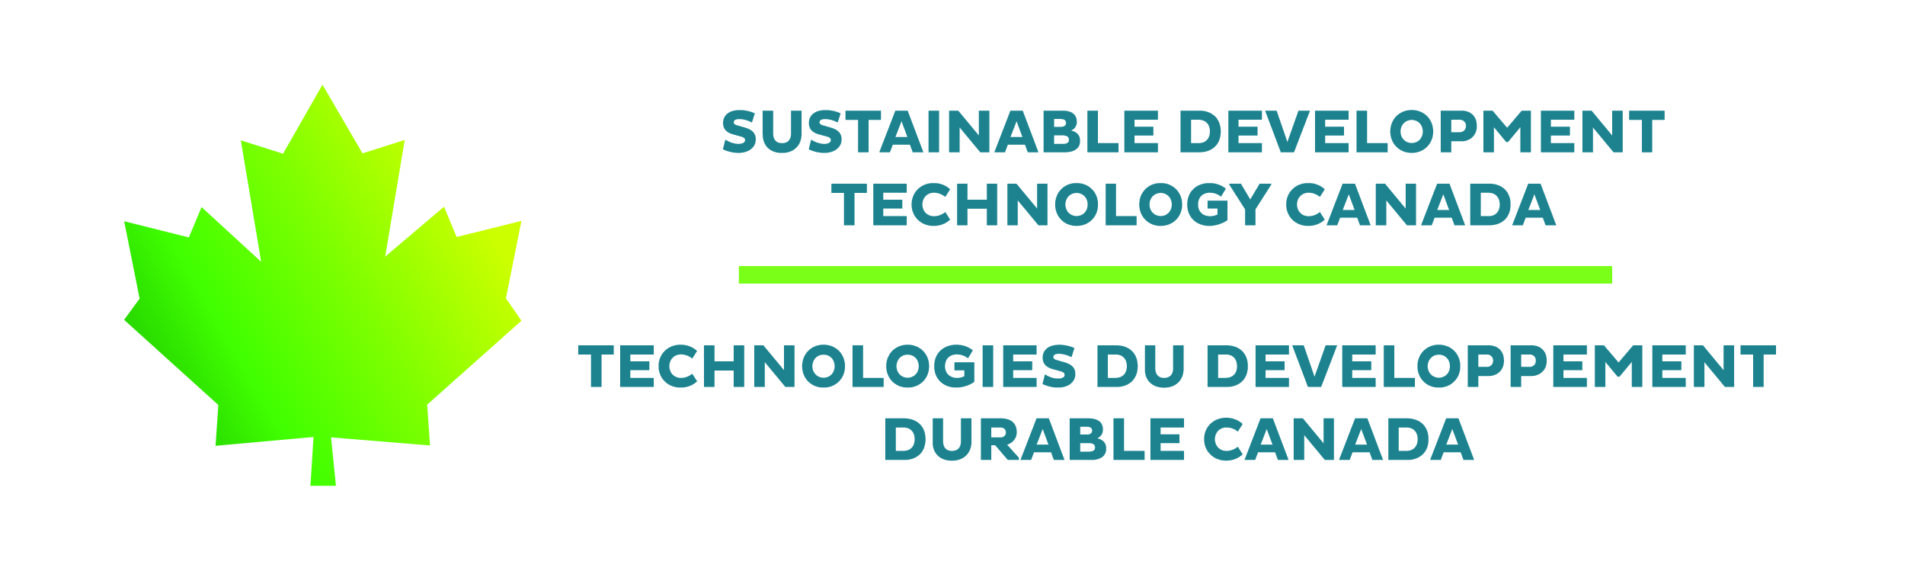 Sustainable Development Technology Canada - Technologies du développement durable Canada (SDTC logo).